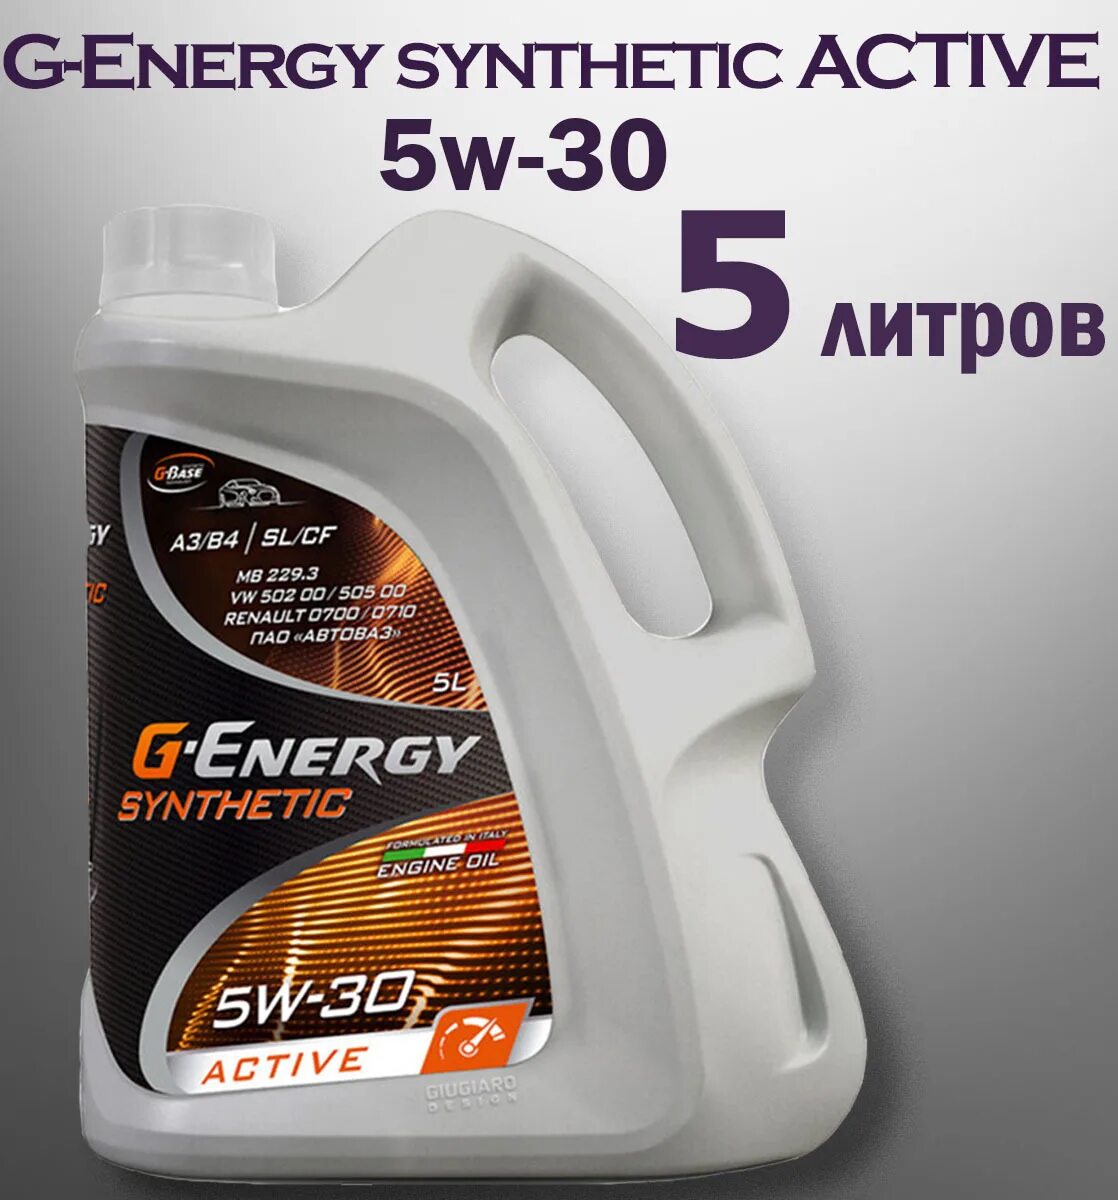 Масло g-Energy Syntetic Activ 5w30. G-Energy Synthetic Active 5w-30. G Energy 5w30 синтетика. G Энерджи 5w30 синтетика.